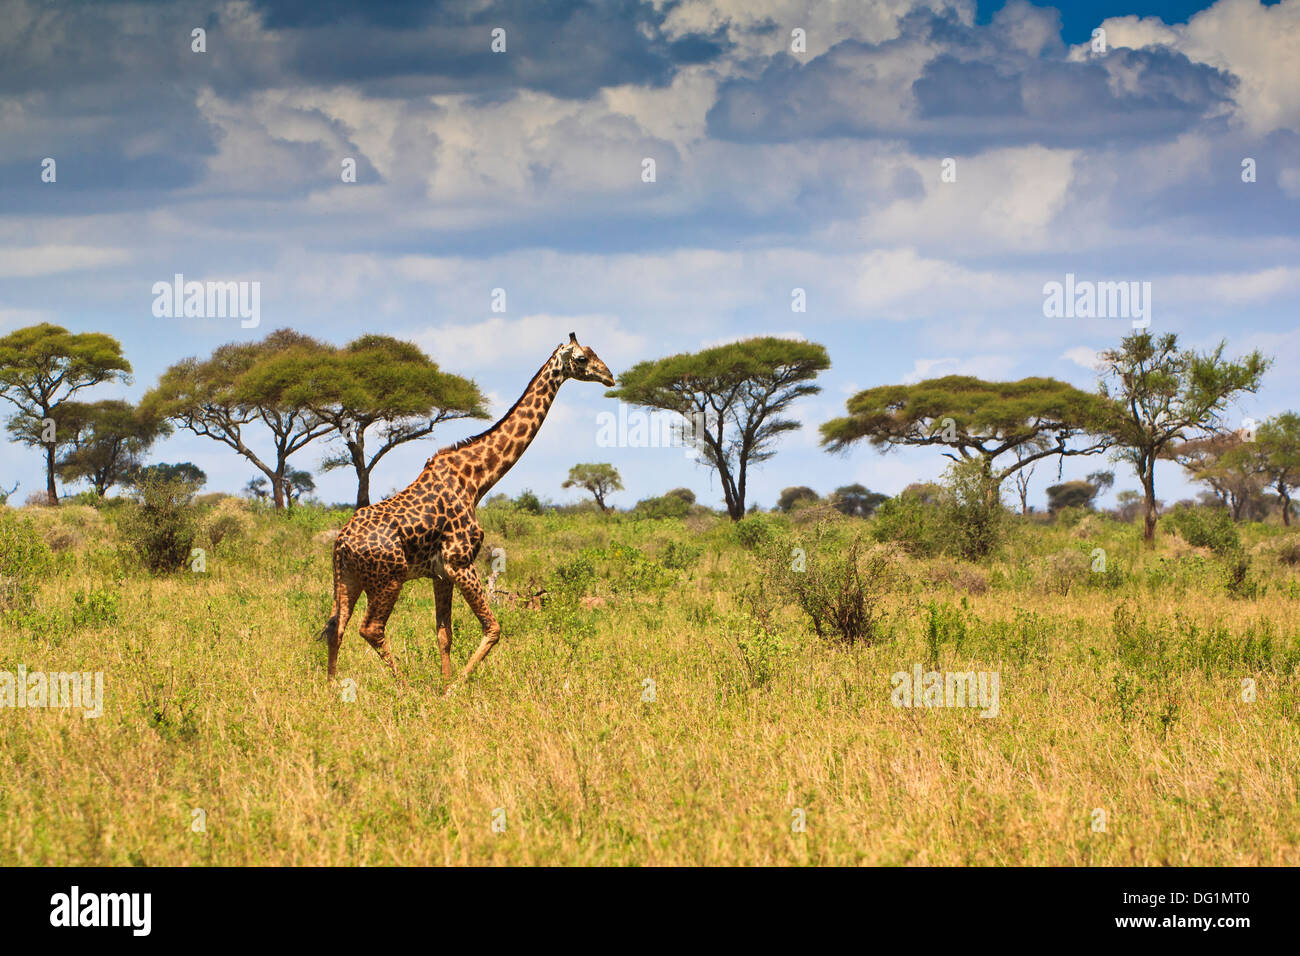 A single giraffe (Giraffa camelopardalis) walking through the scenic landscape of the Tarangire National Park, Tanzania, Africa Stock Photo